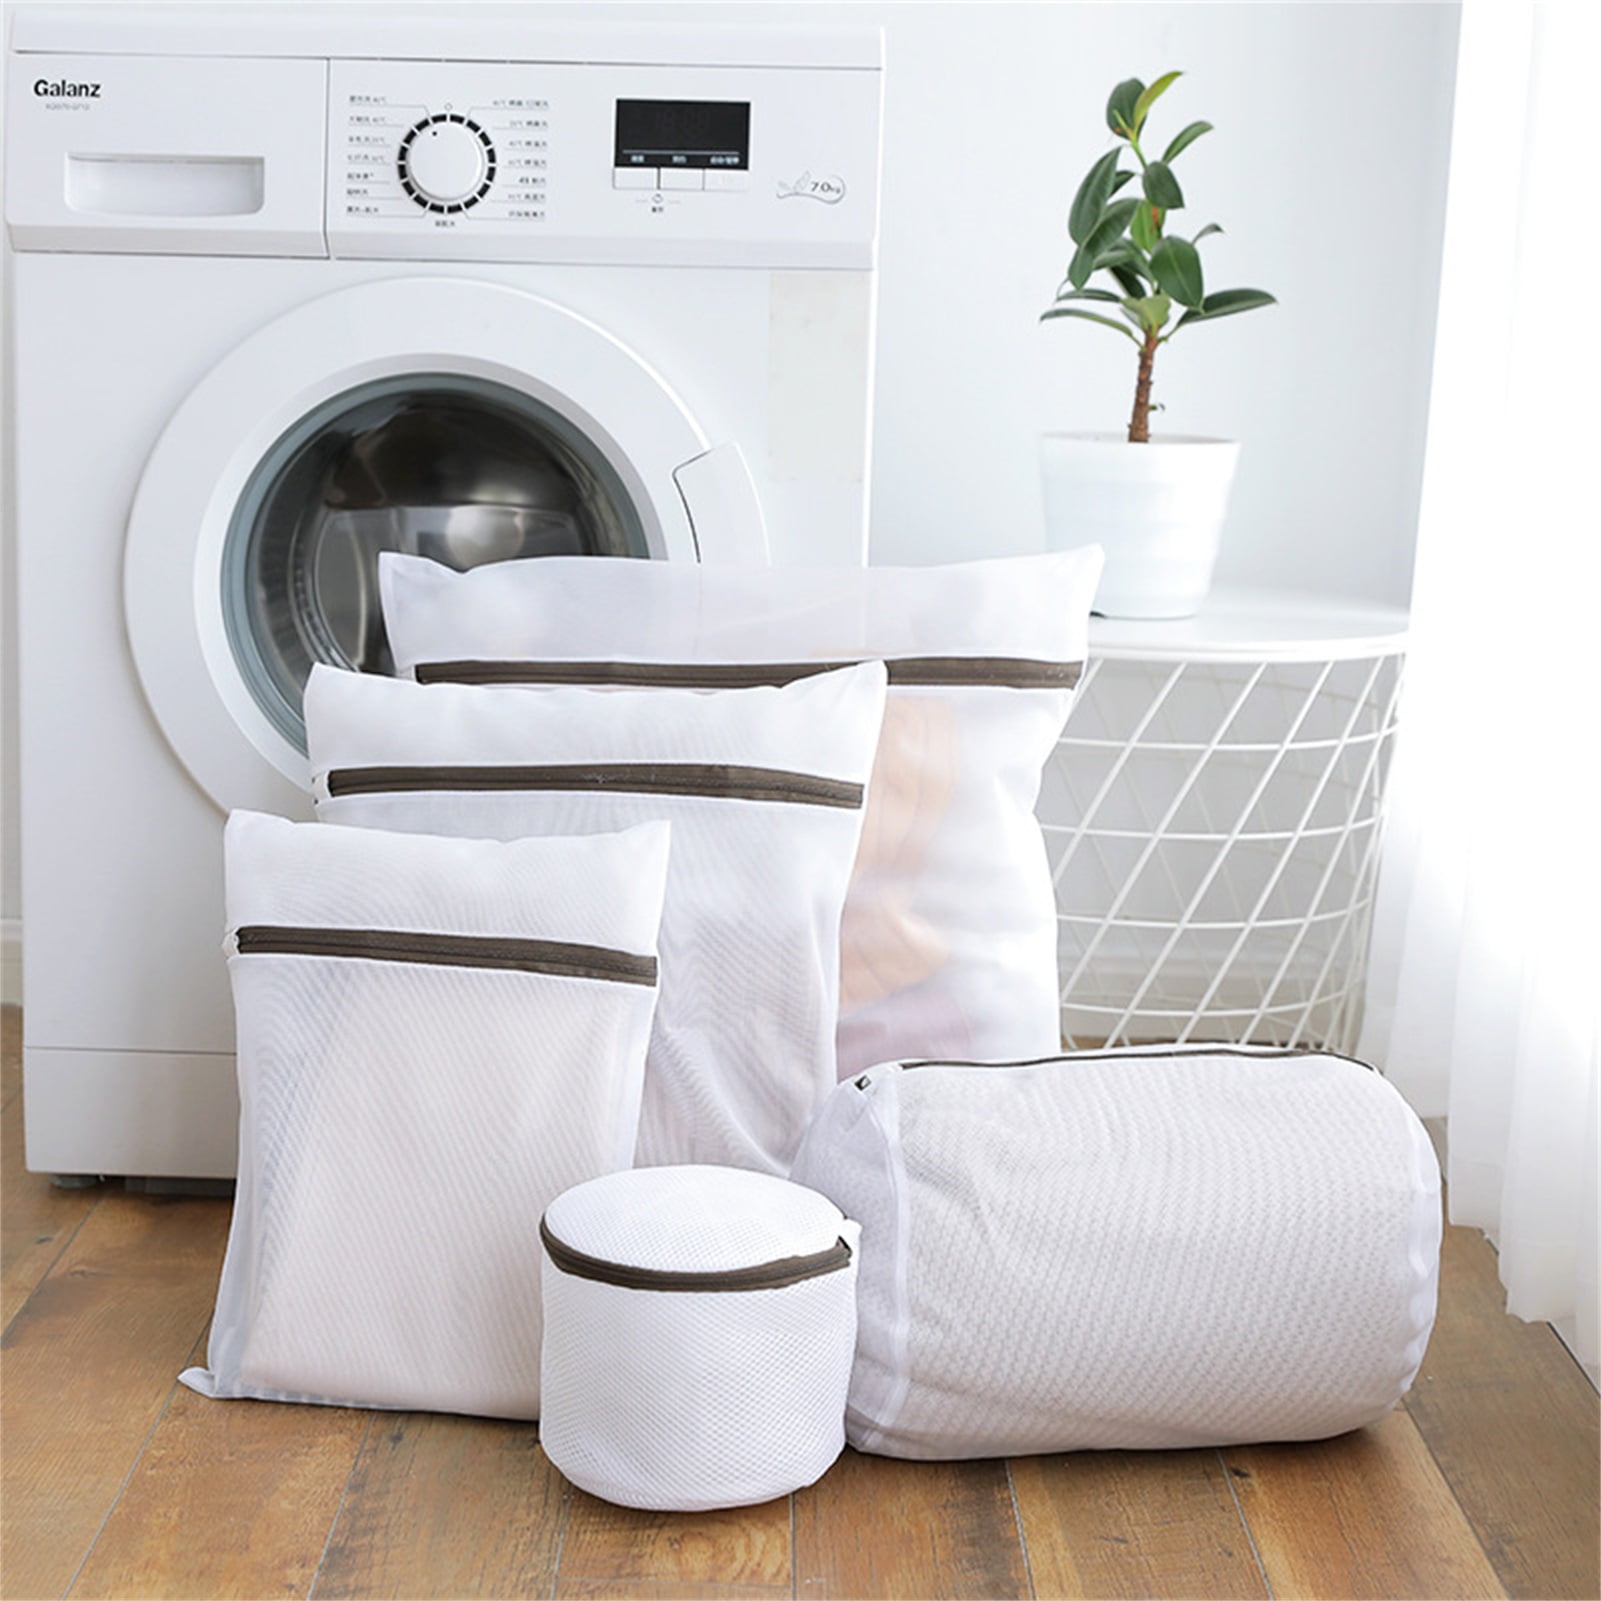 Set of 5 Washing Laundry Quality Mesh Bags White Zipper 1xL 2xM 2xS 